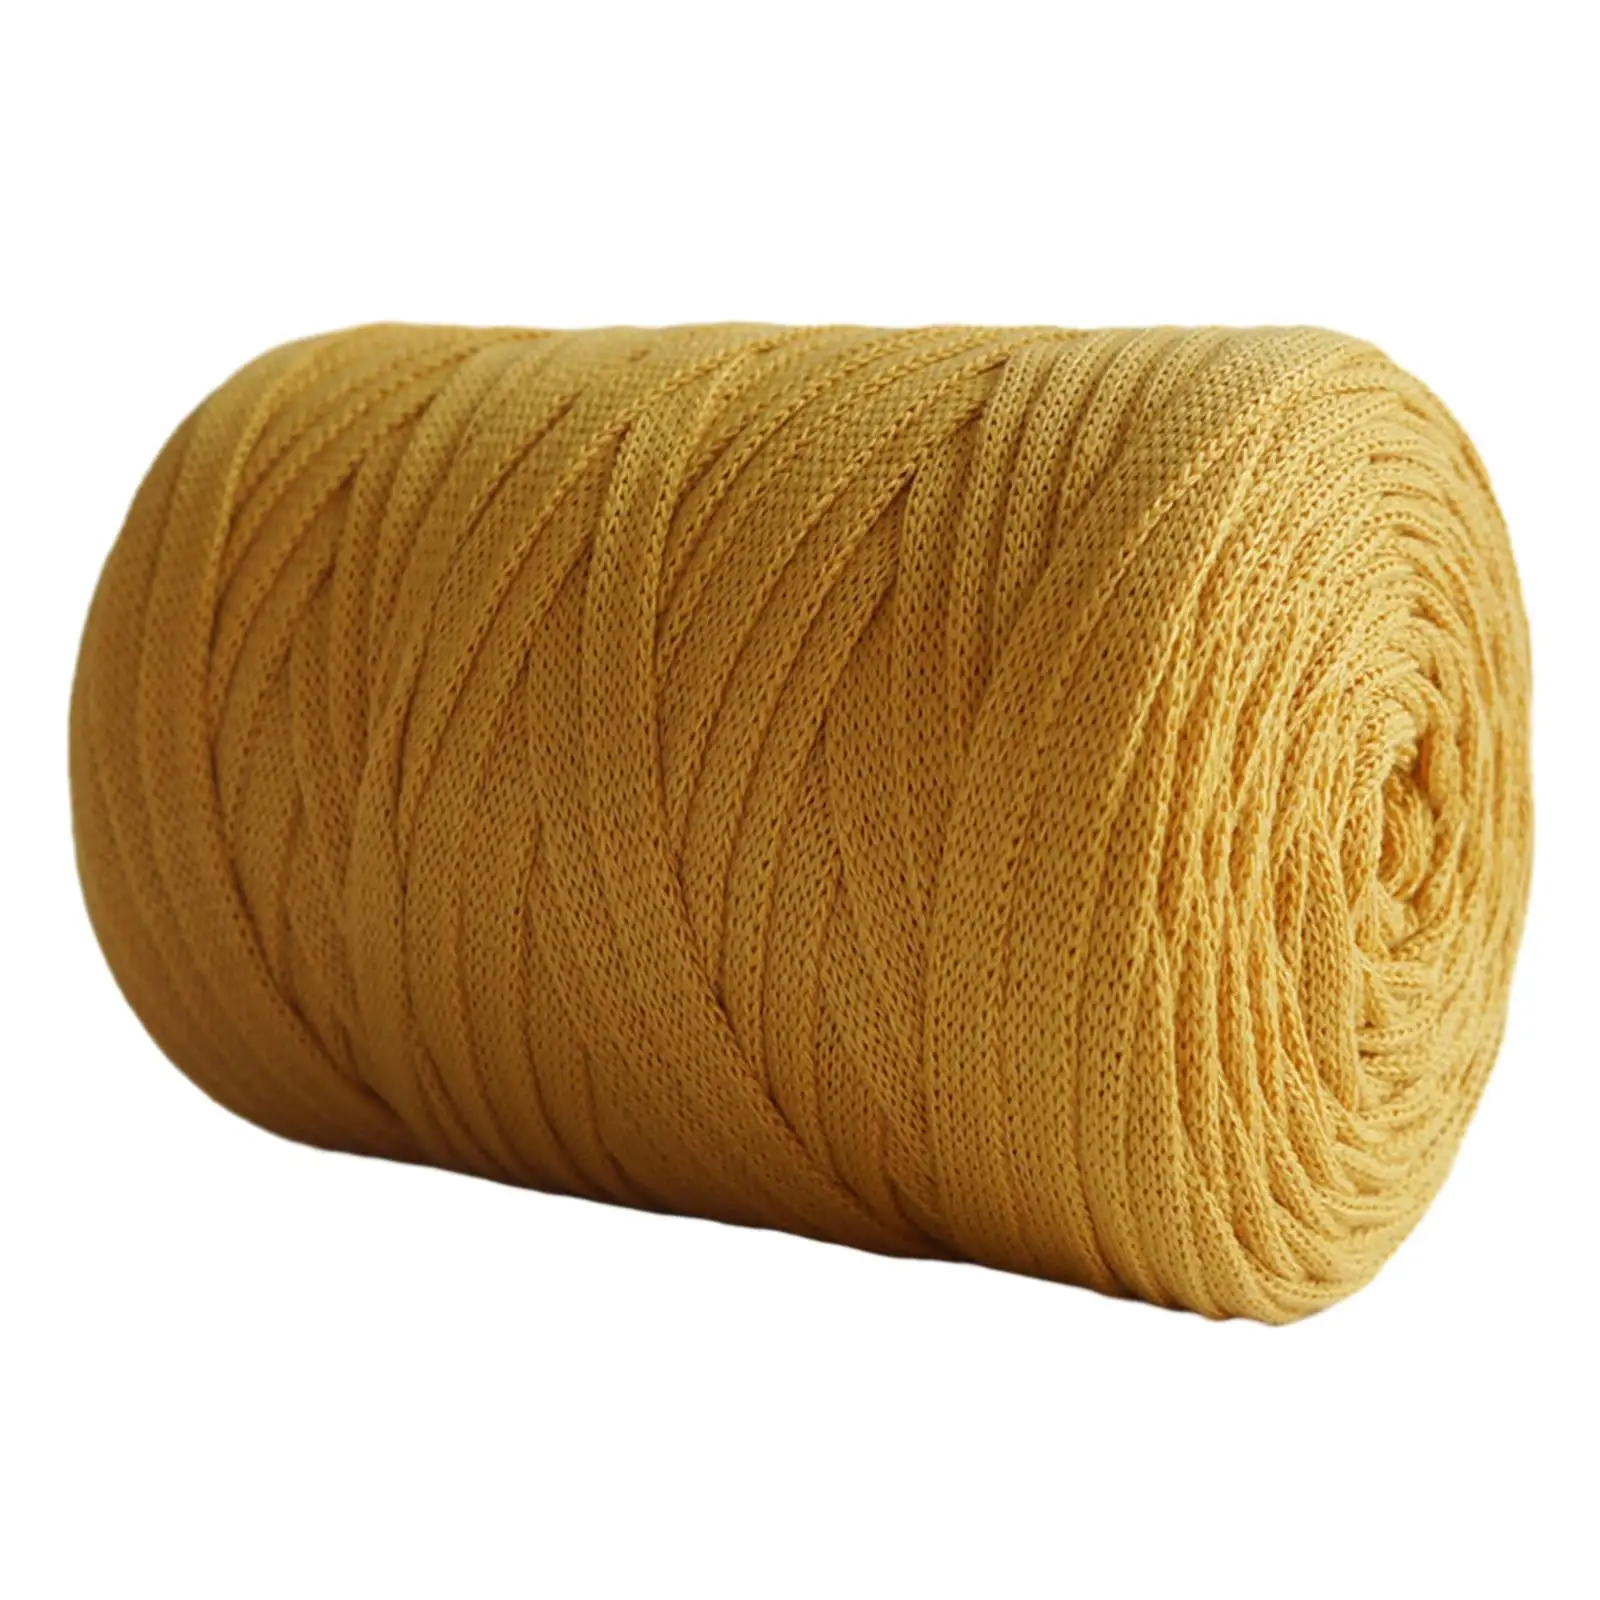 Knitting Yarn Rugs Bag Making Material Package Macrame Bags Soft Chunky Yarn